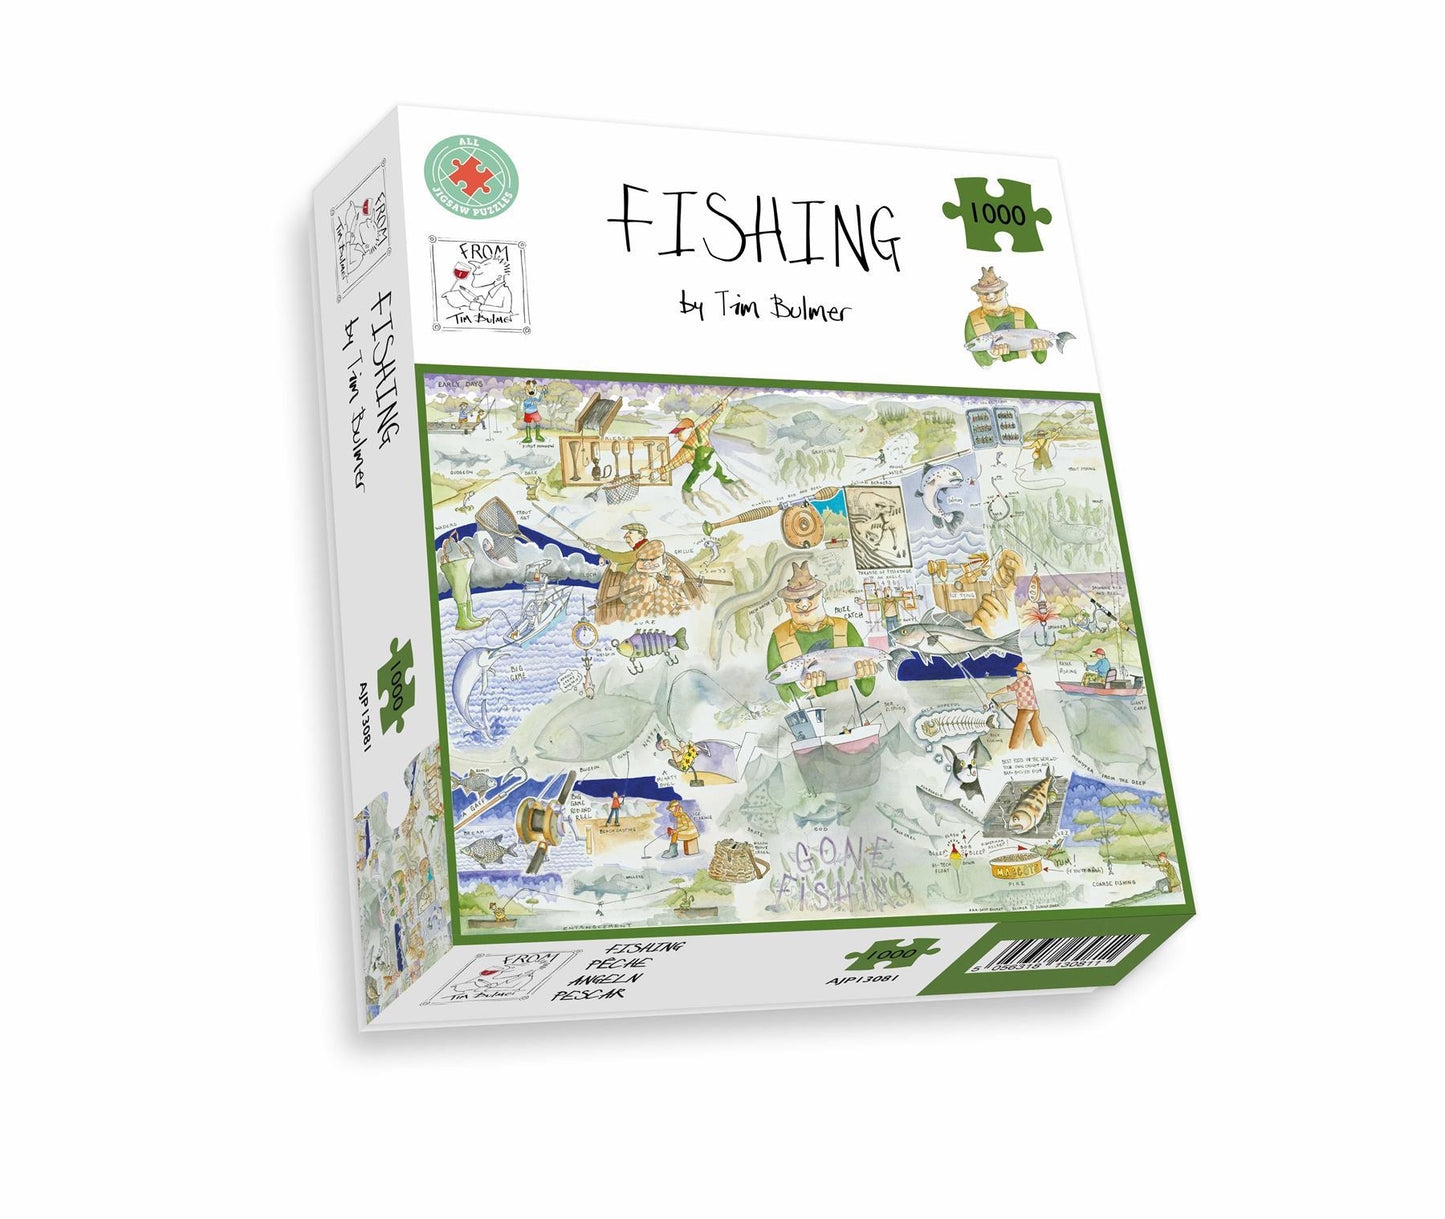 Fishing - Tim Bulmer 1000 Piece Puzzle